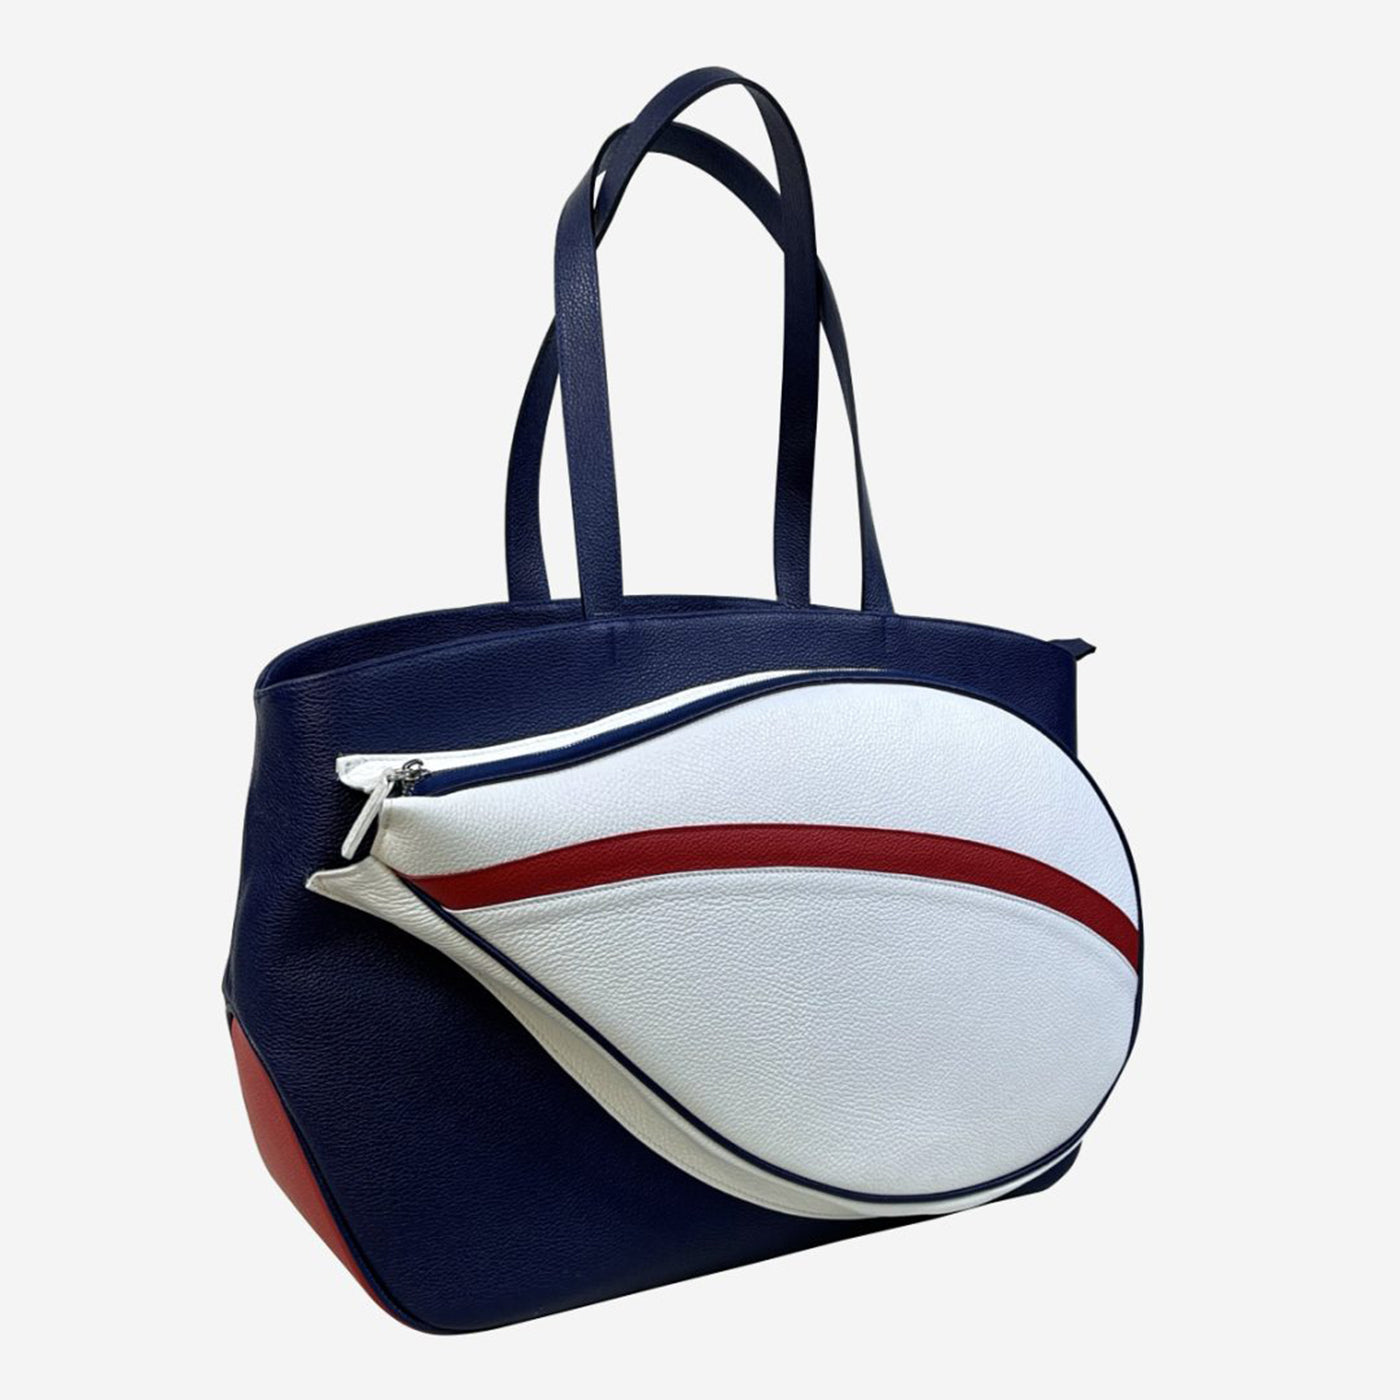 Bolsa de deporte azul/roja/blanca con bolsillo en forma de raqueta de tenis - Vista alternativa 3